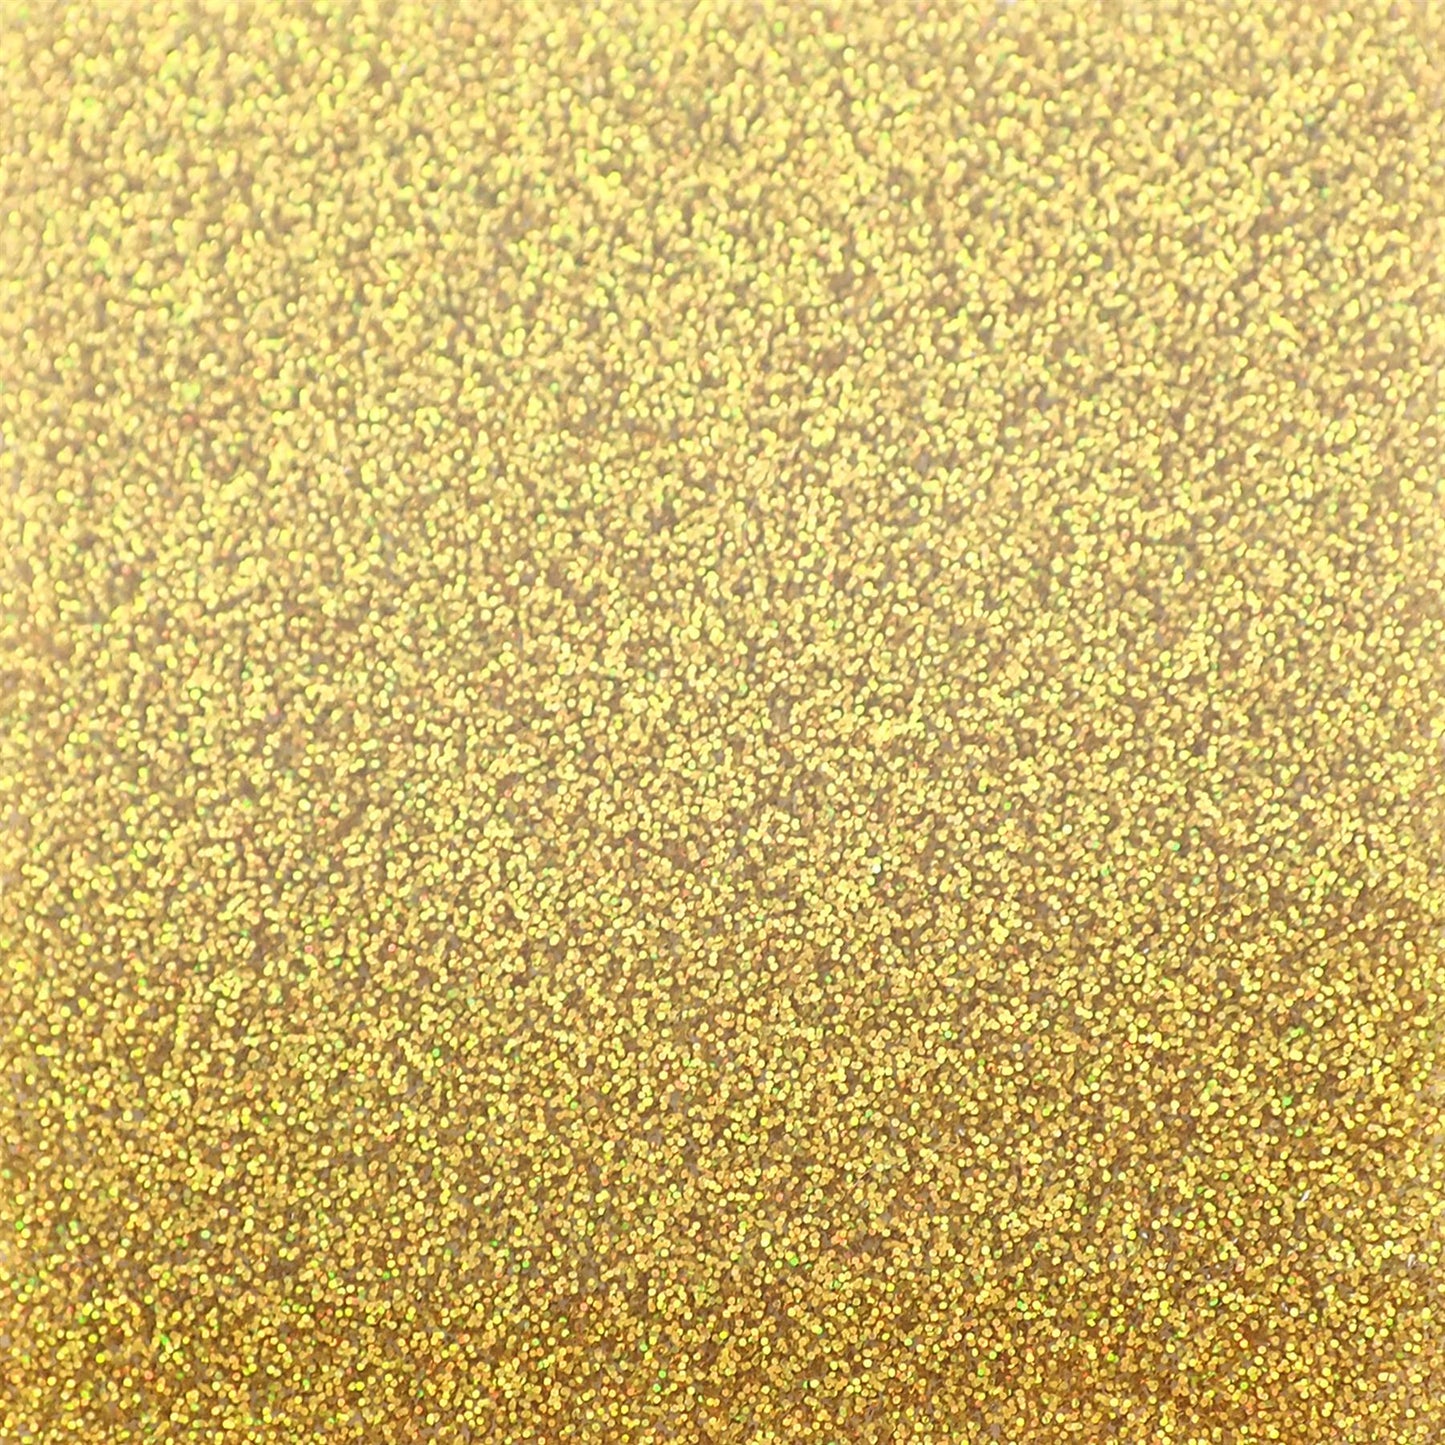 Incudo Light Gold 2-Sided Glitter Acrylic Sheet - 300x200x3mm (11.8x7.87x0.12")